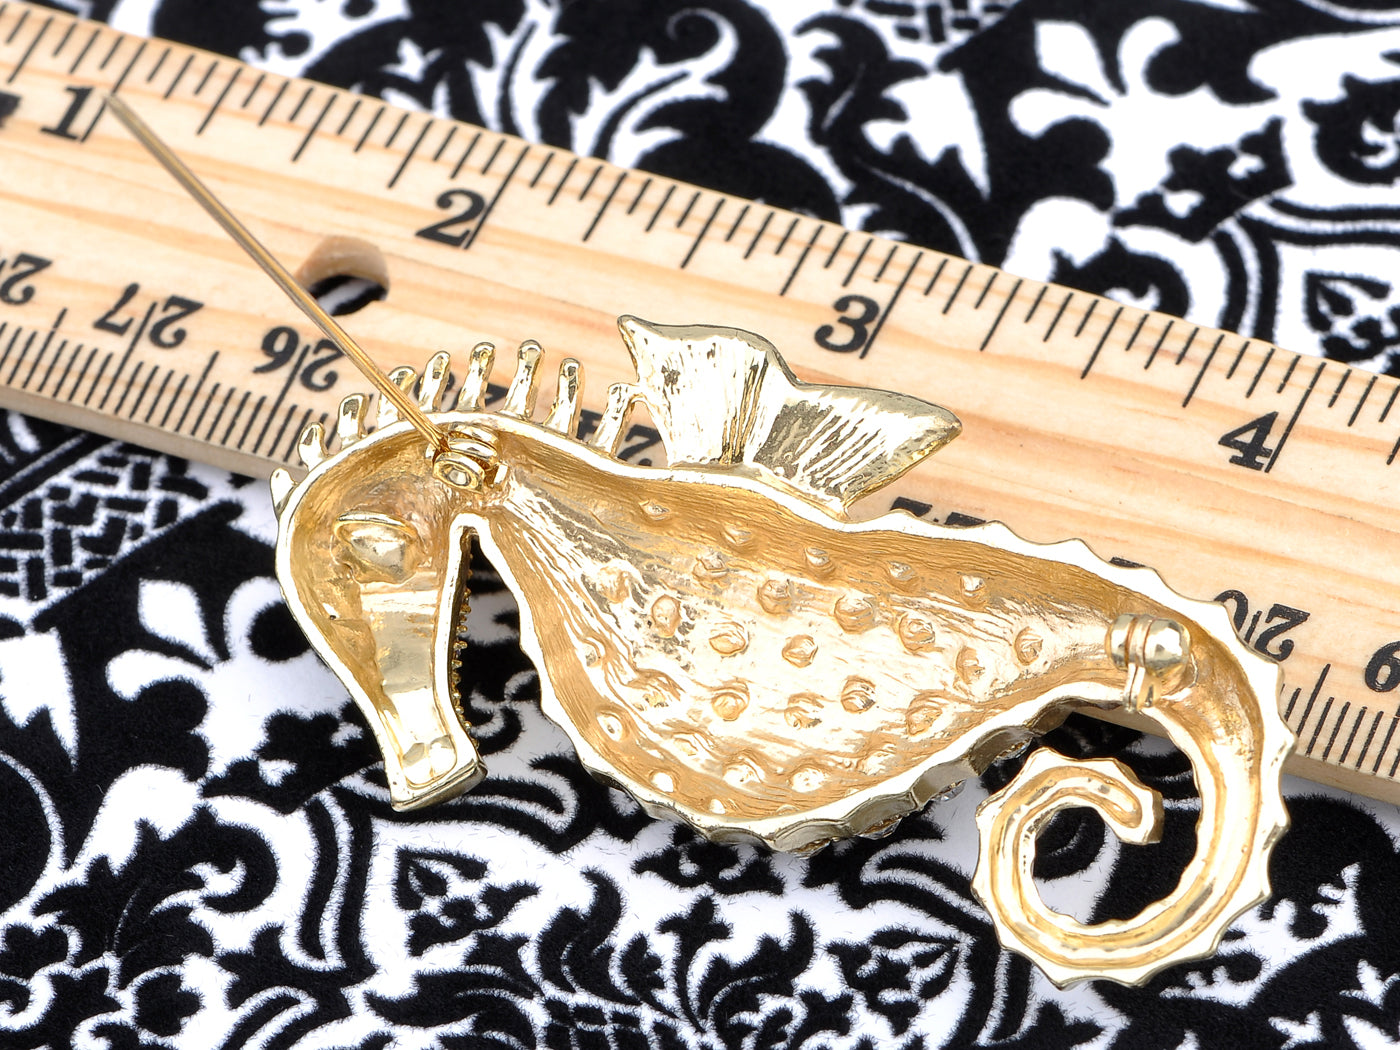 Seahorse Sea Creature Brooch Pin Jewelry